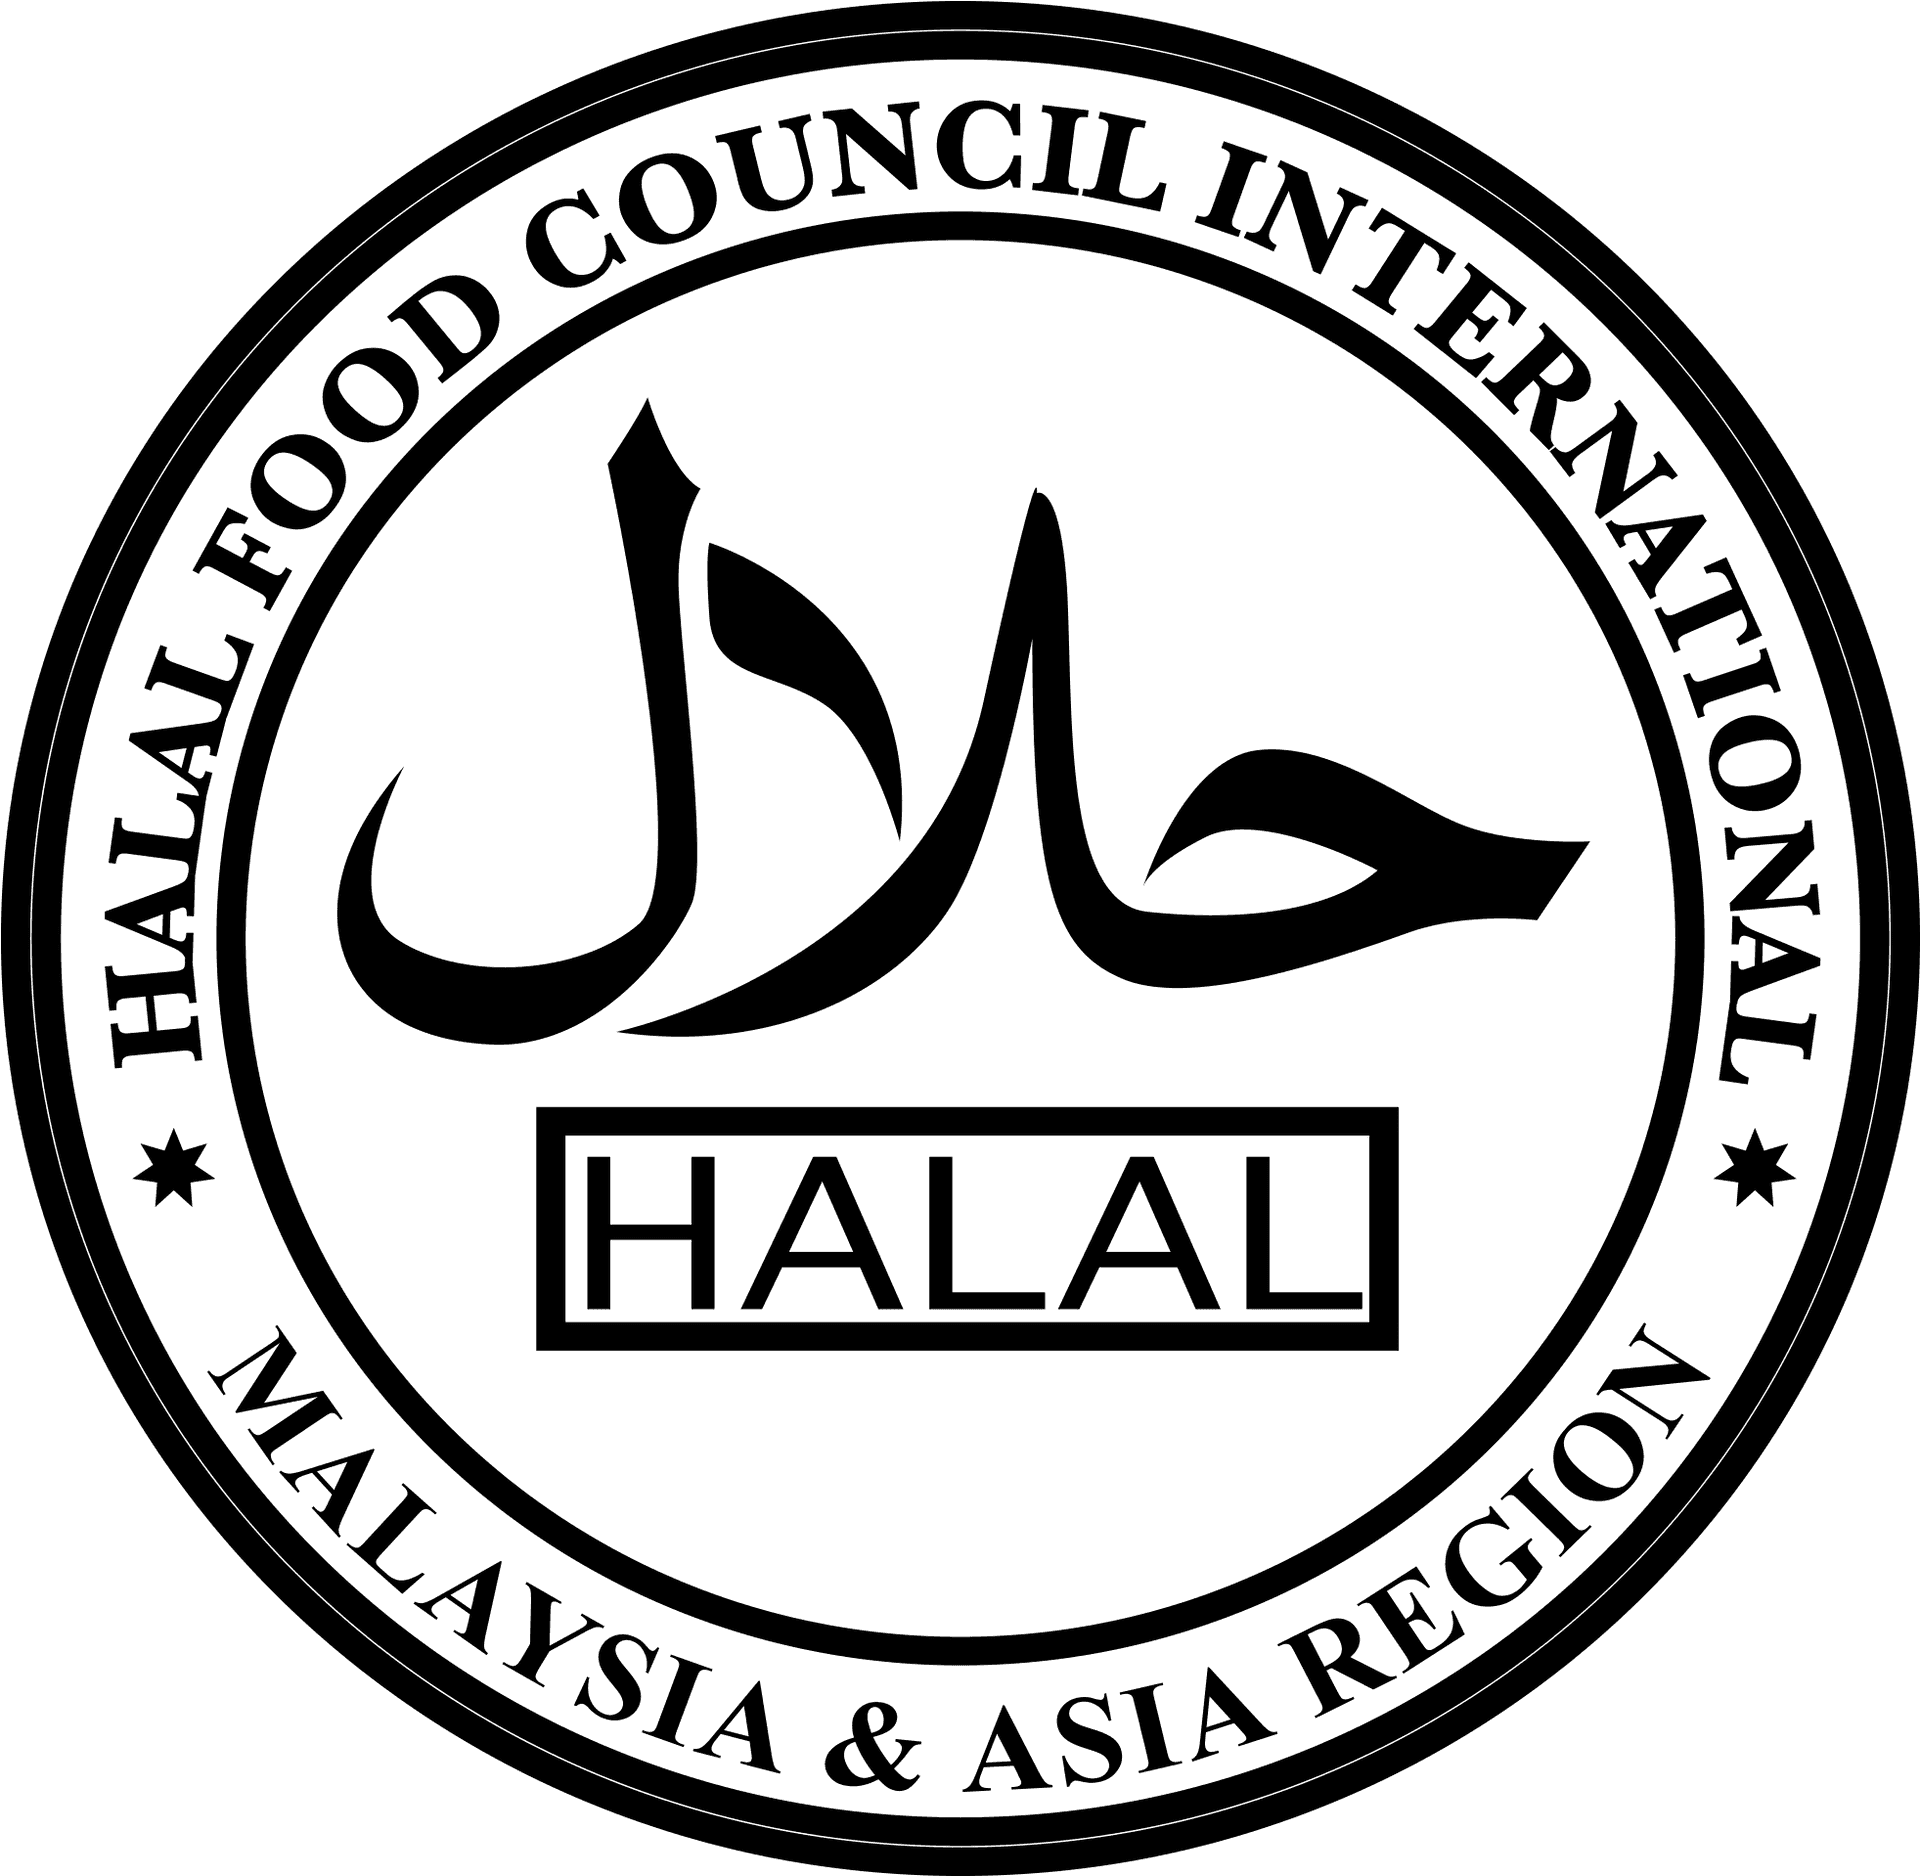 Halal Food Council International Certification Seal PNG